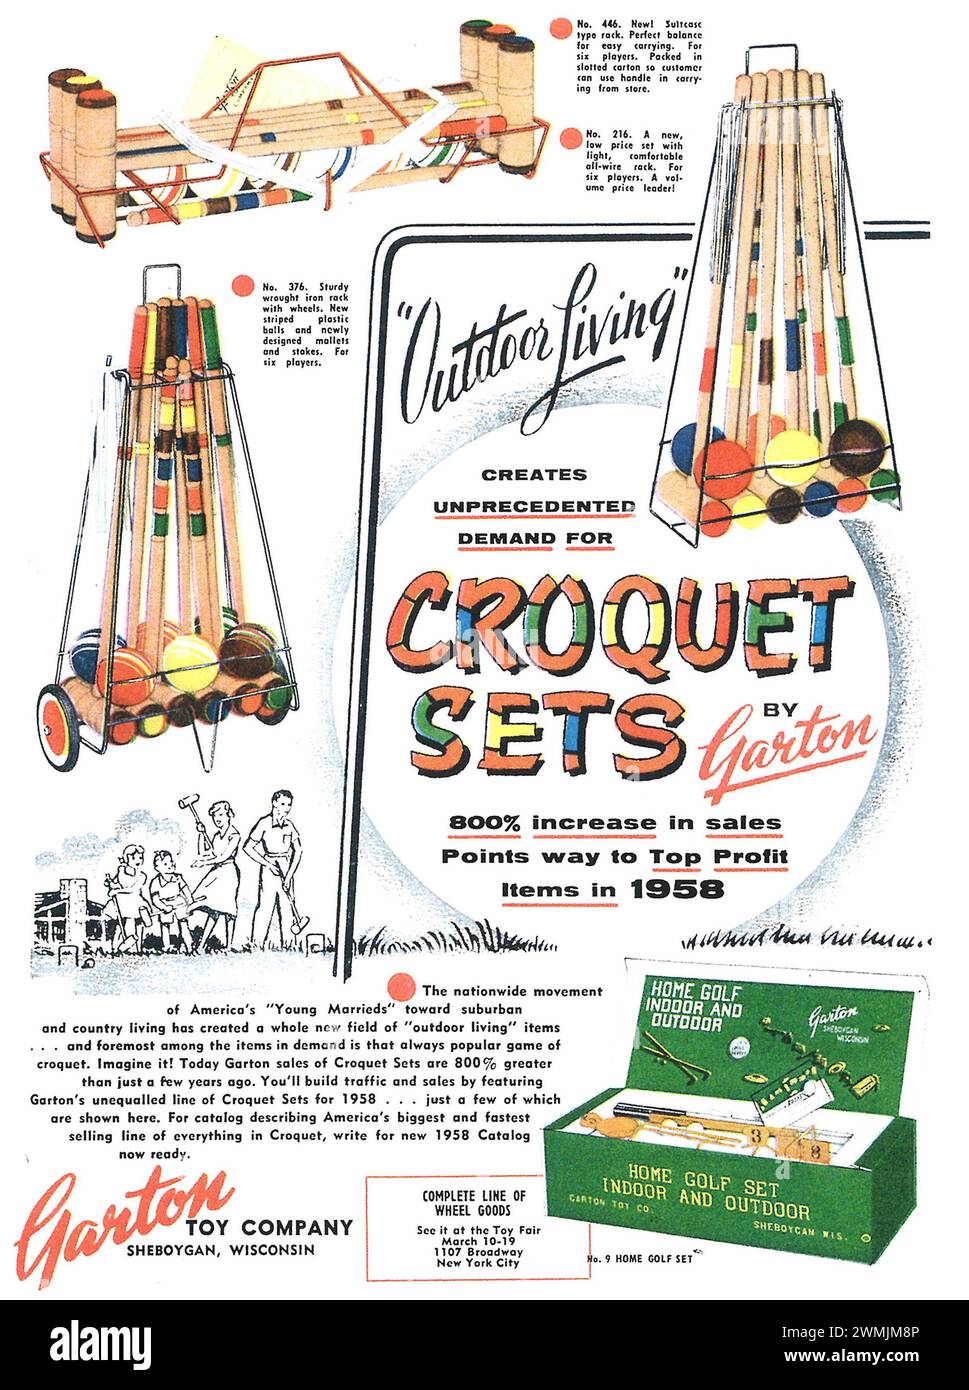 1958 Garton Toy Company Croquet Set annuncio a stampa Foto Stock